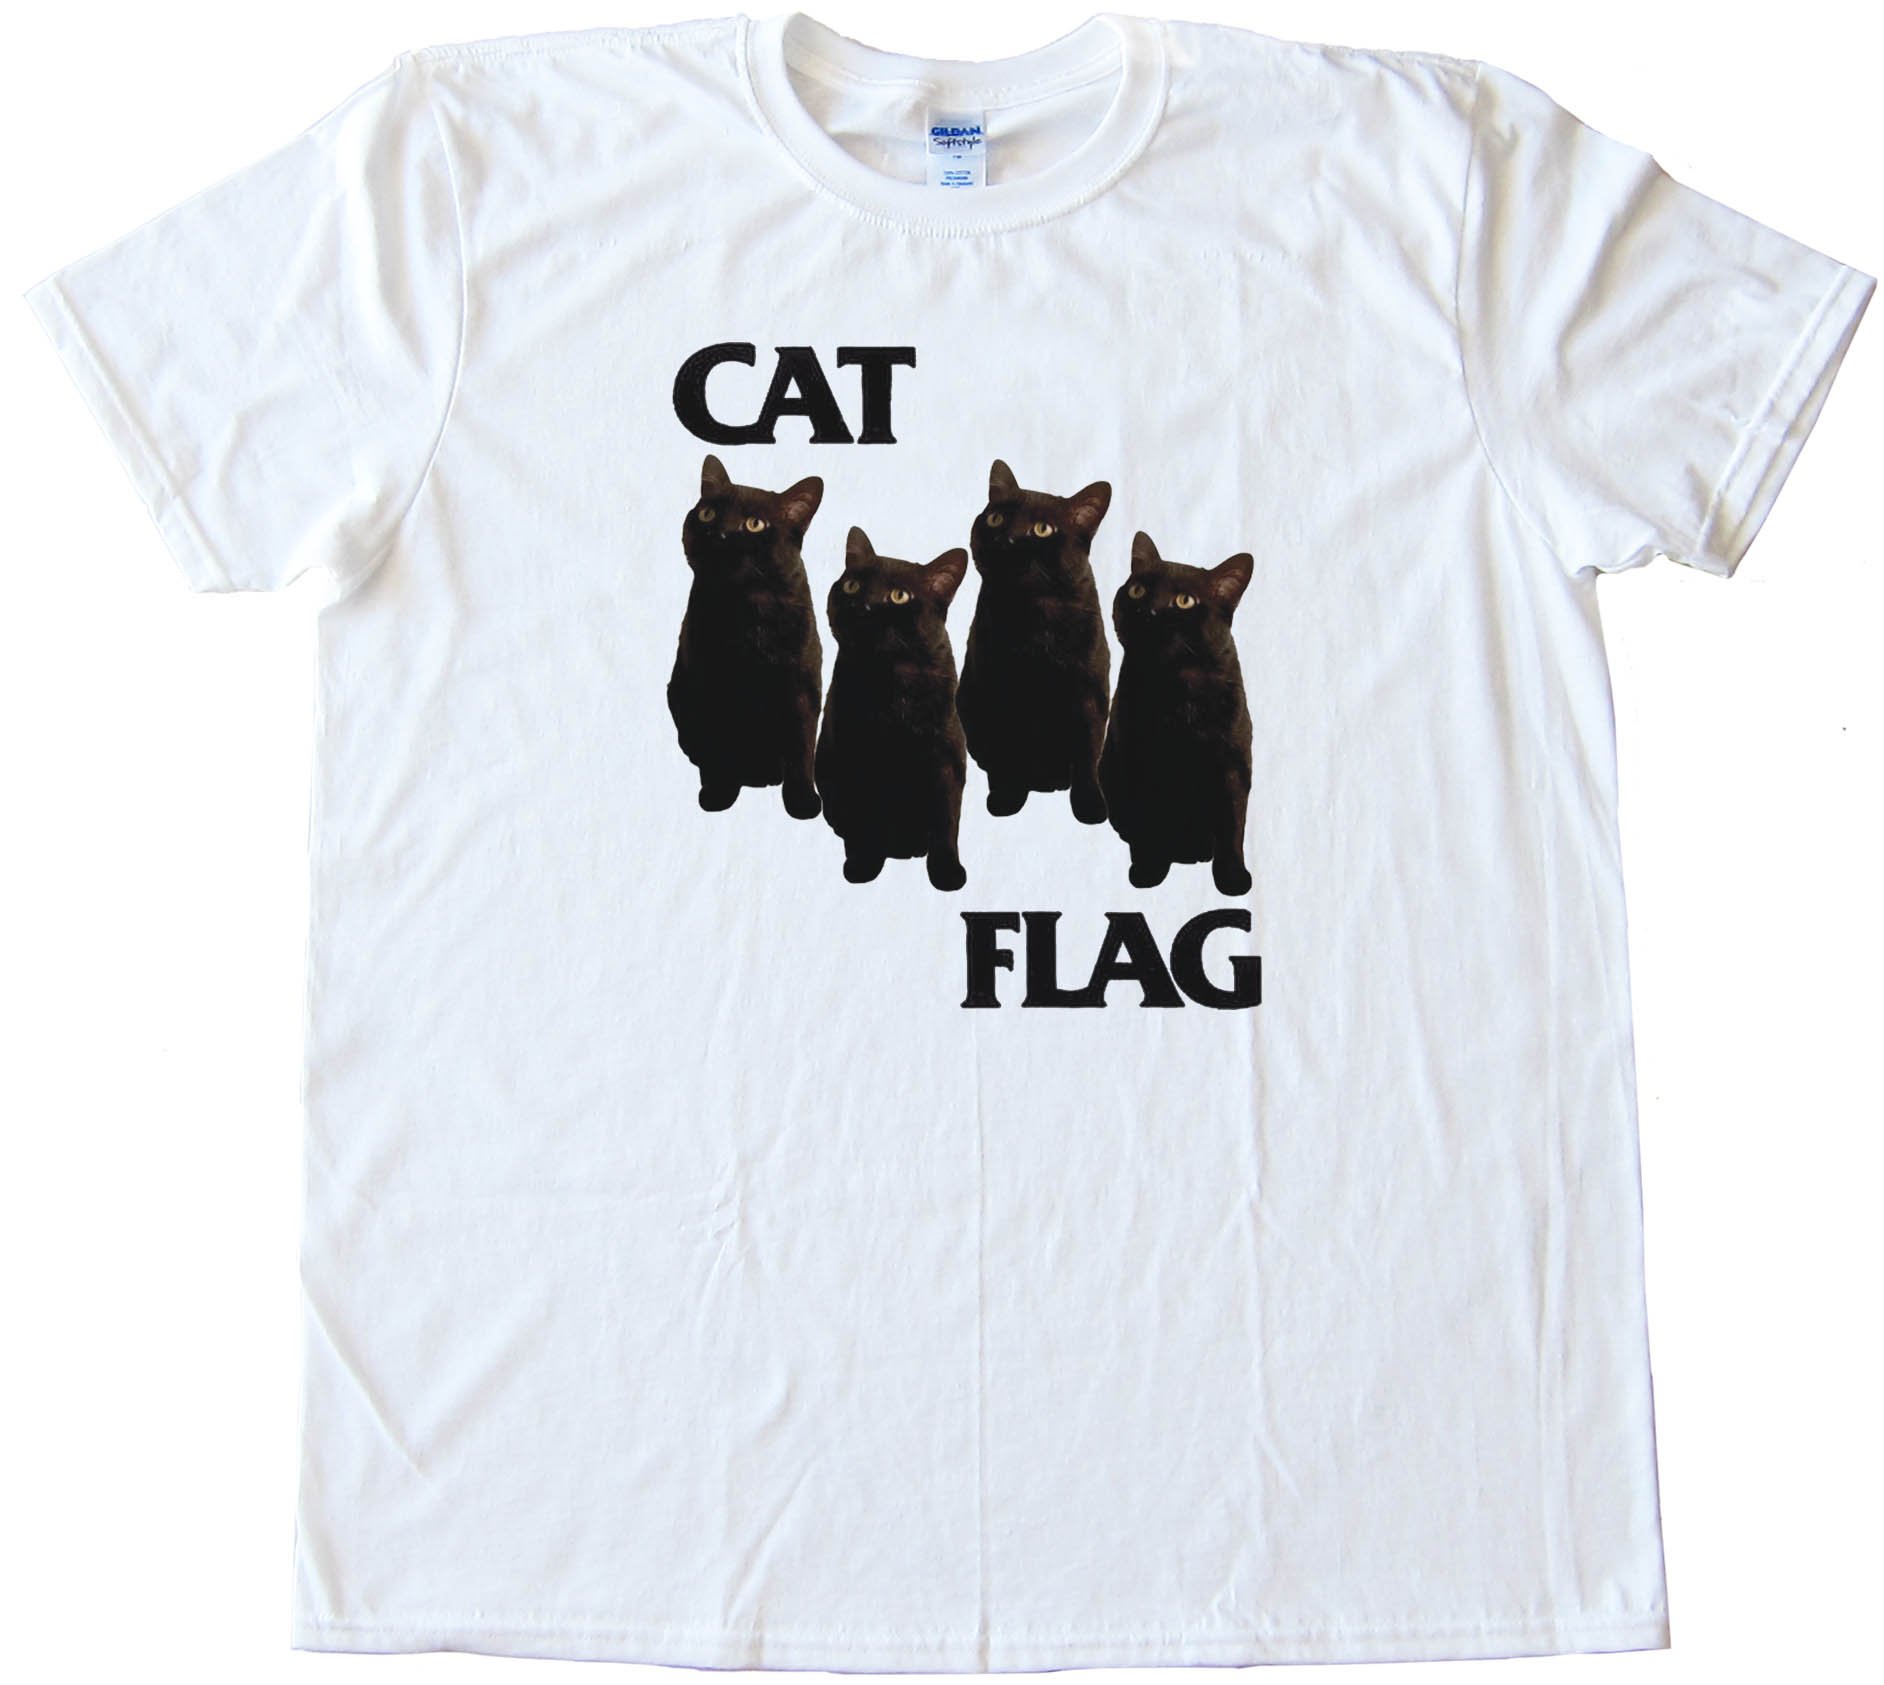 Cat Flag Tee Shirt